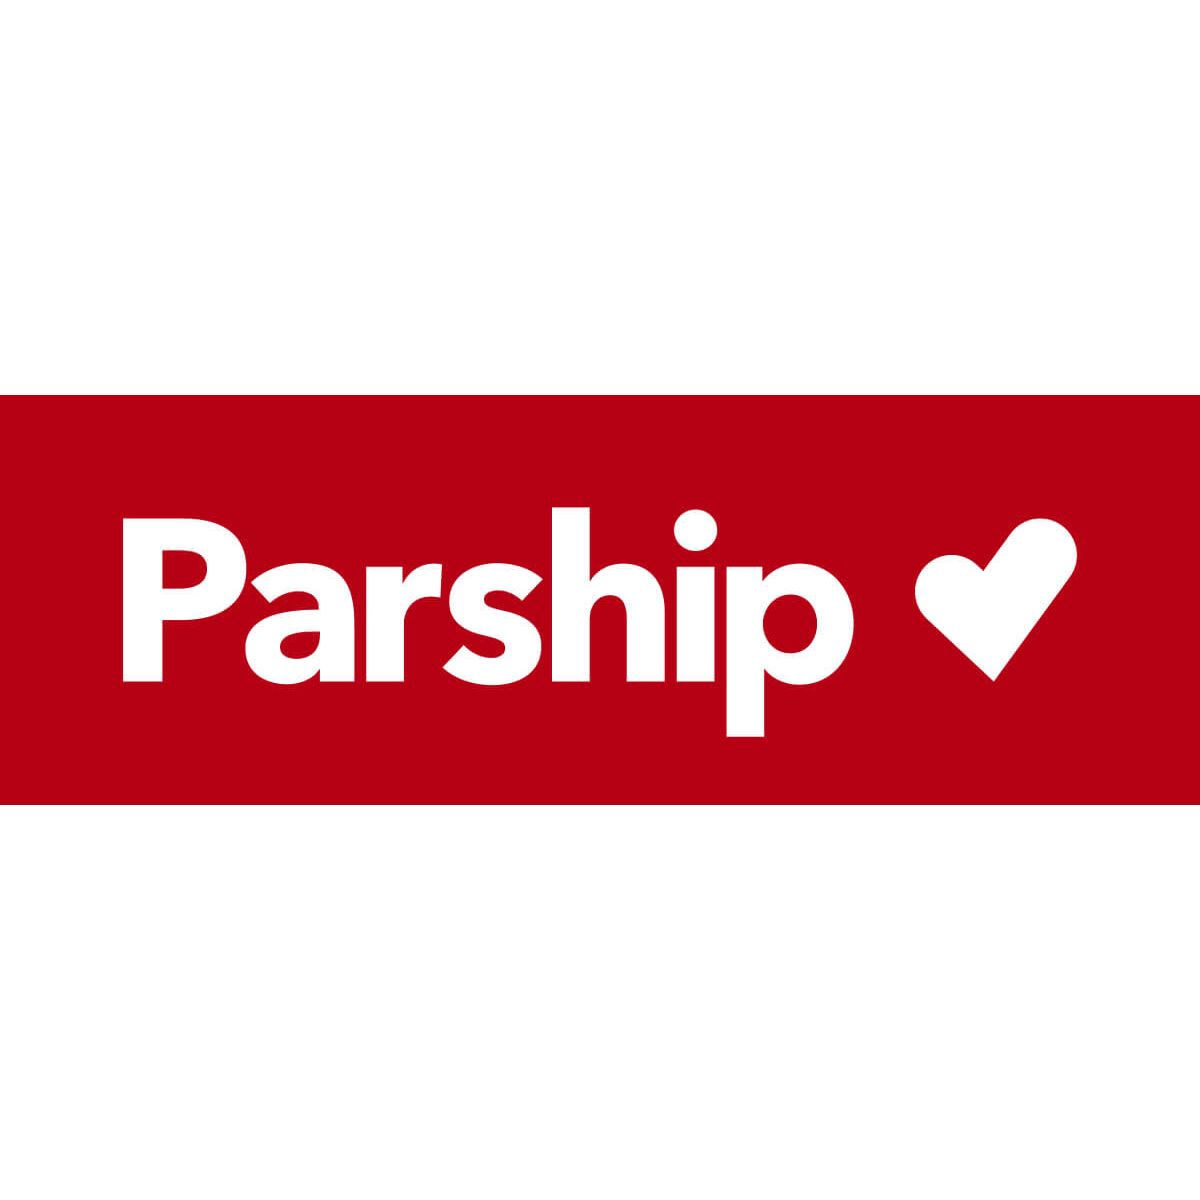 Ch parship login The 5